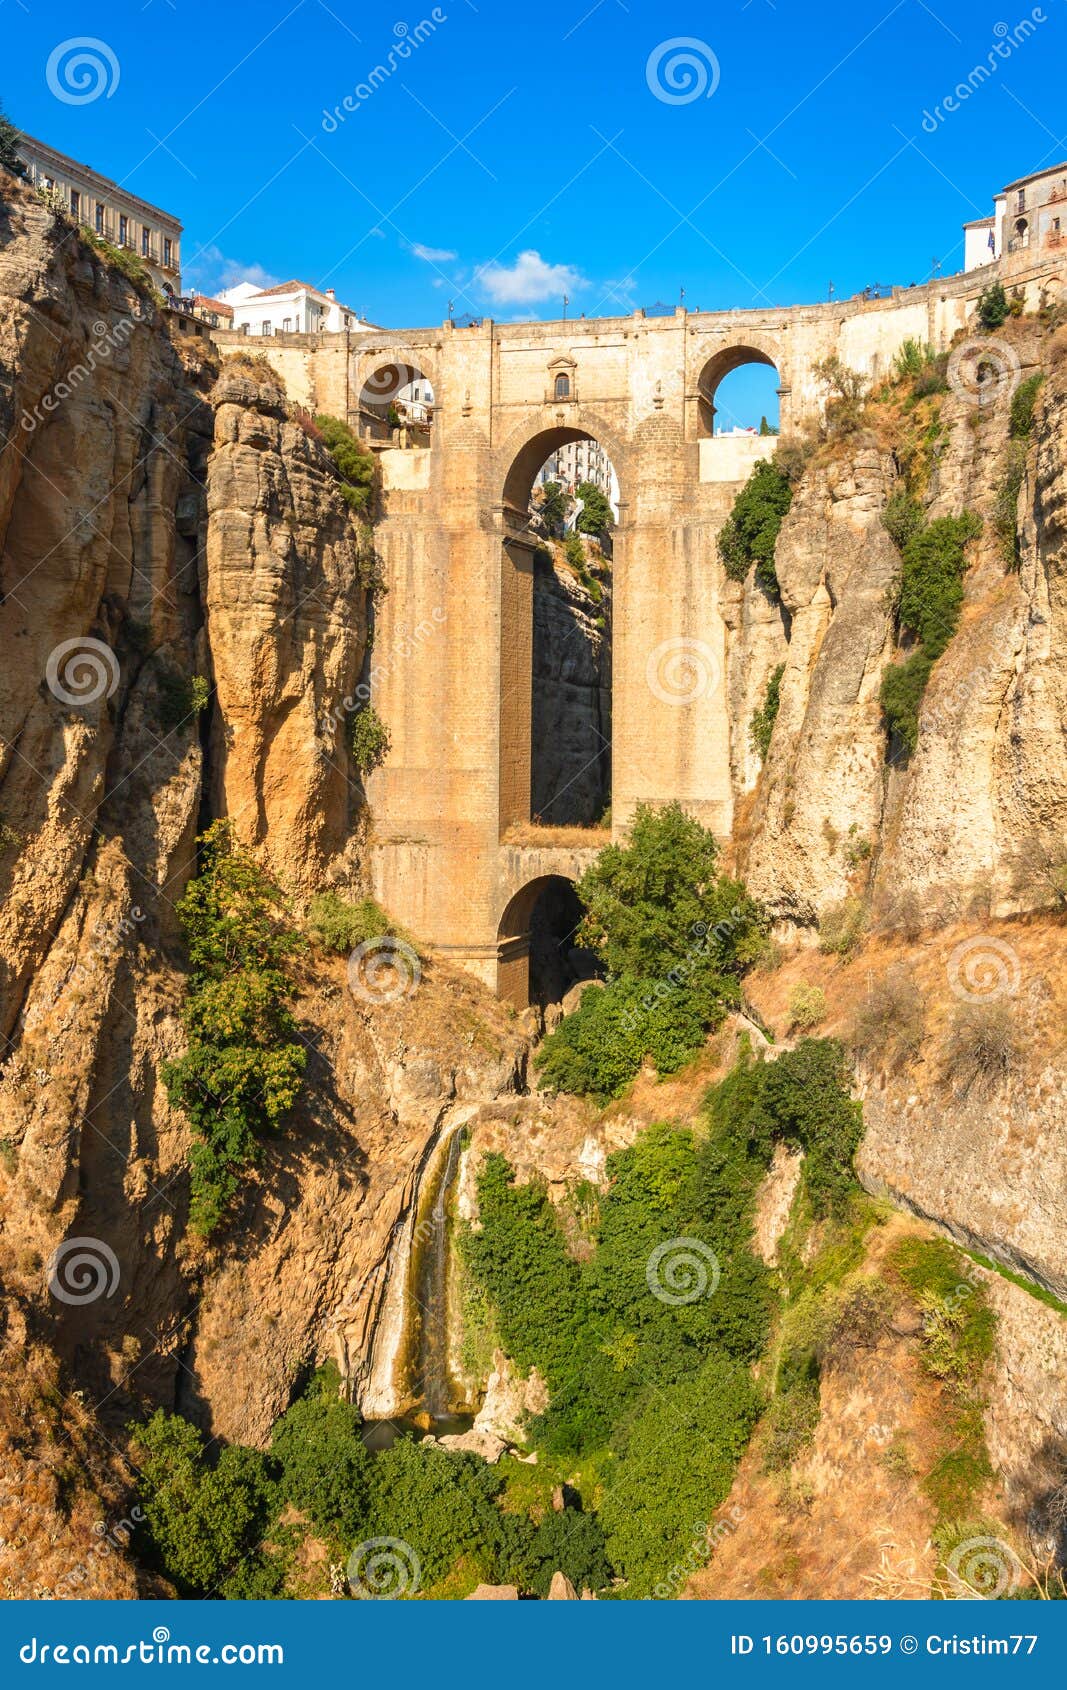 ronda andalucia malaga spain old bridge arch spanish architecture landmark